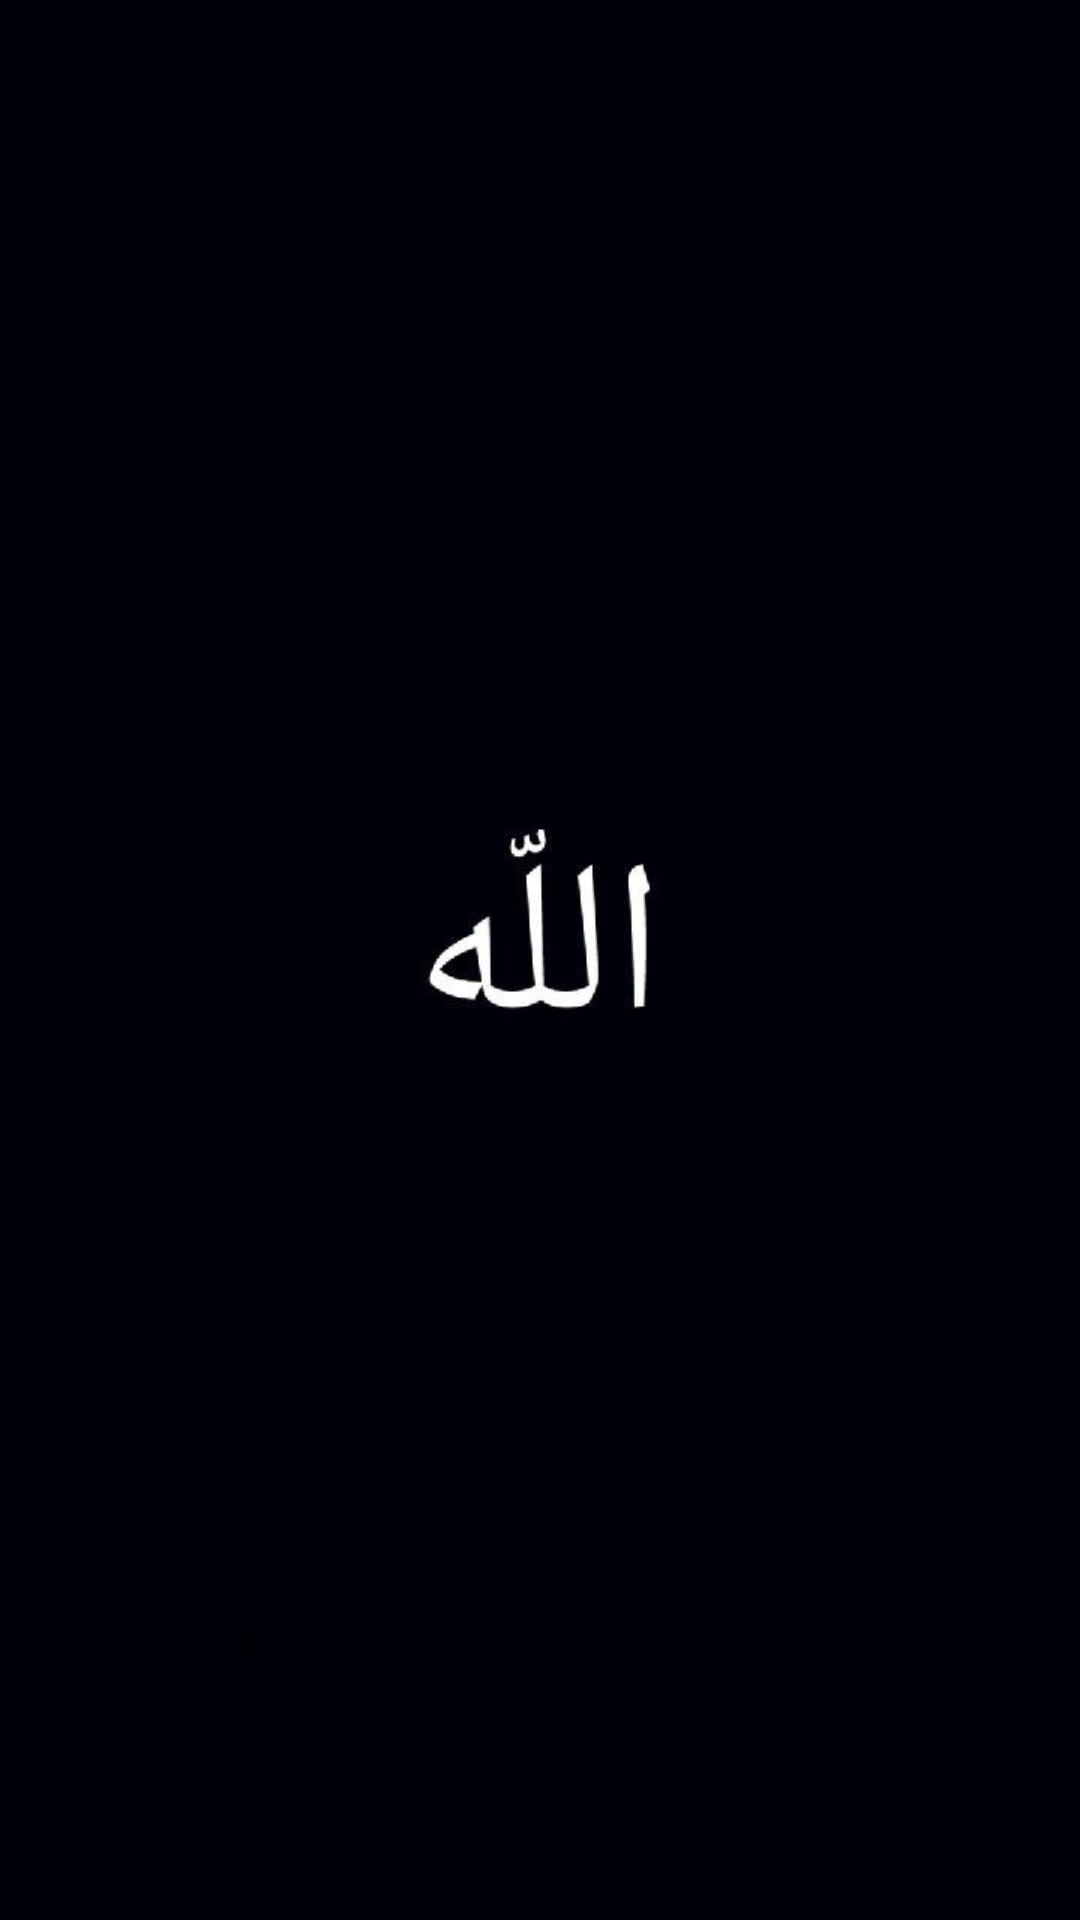 Allah Wallpaper Allah Name Background Download